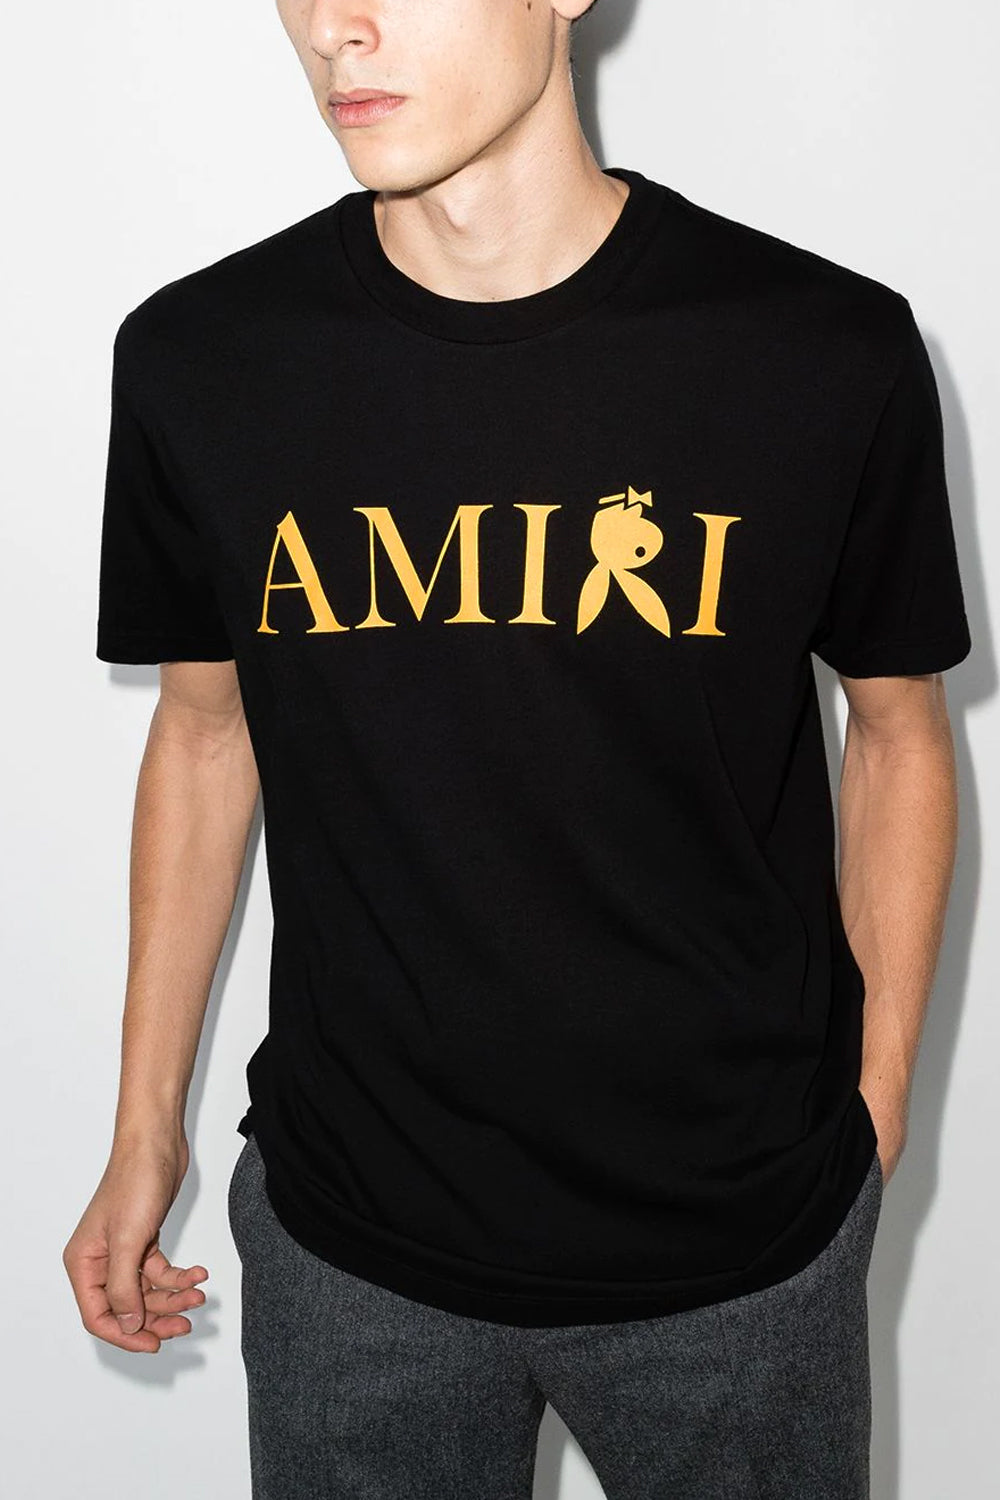 AMIRI playboy black T-shirt